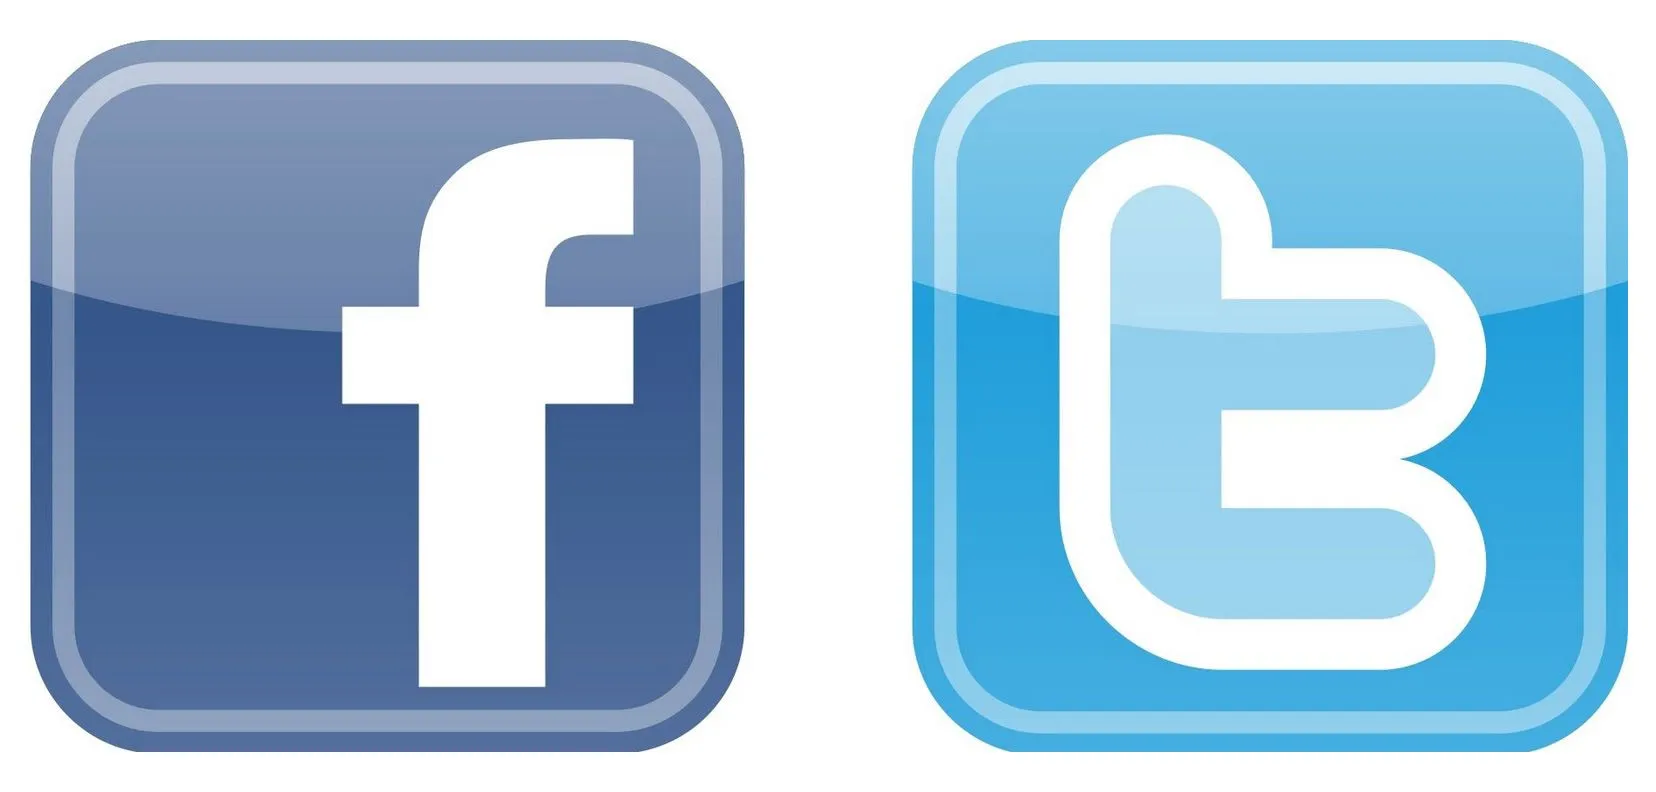 Logos For > Facebook Logo Jpg Download